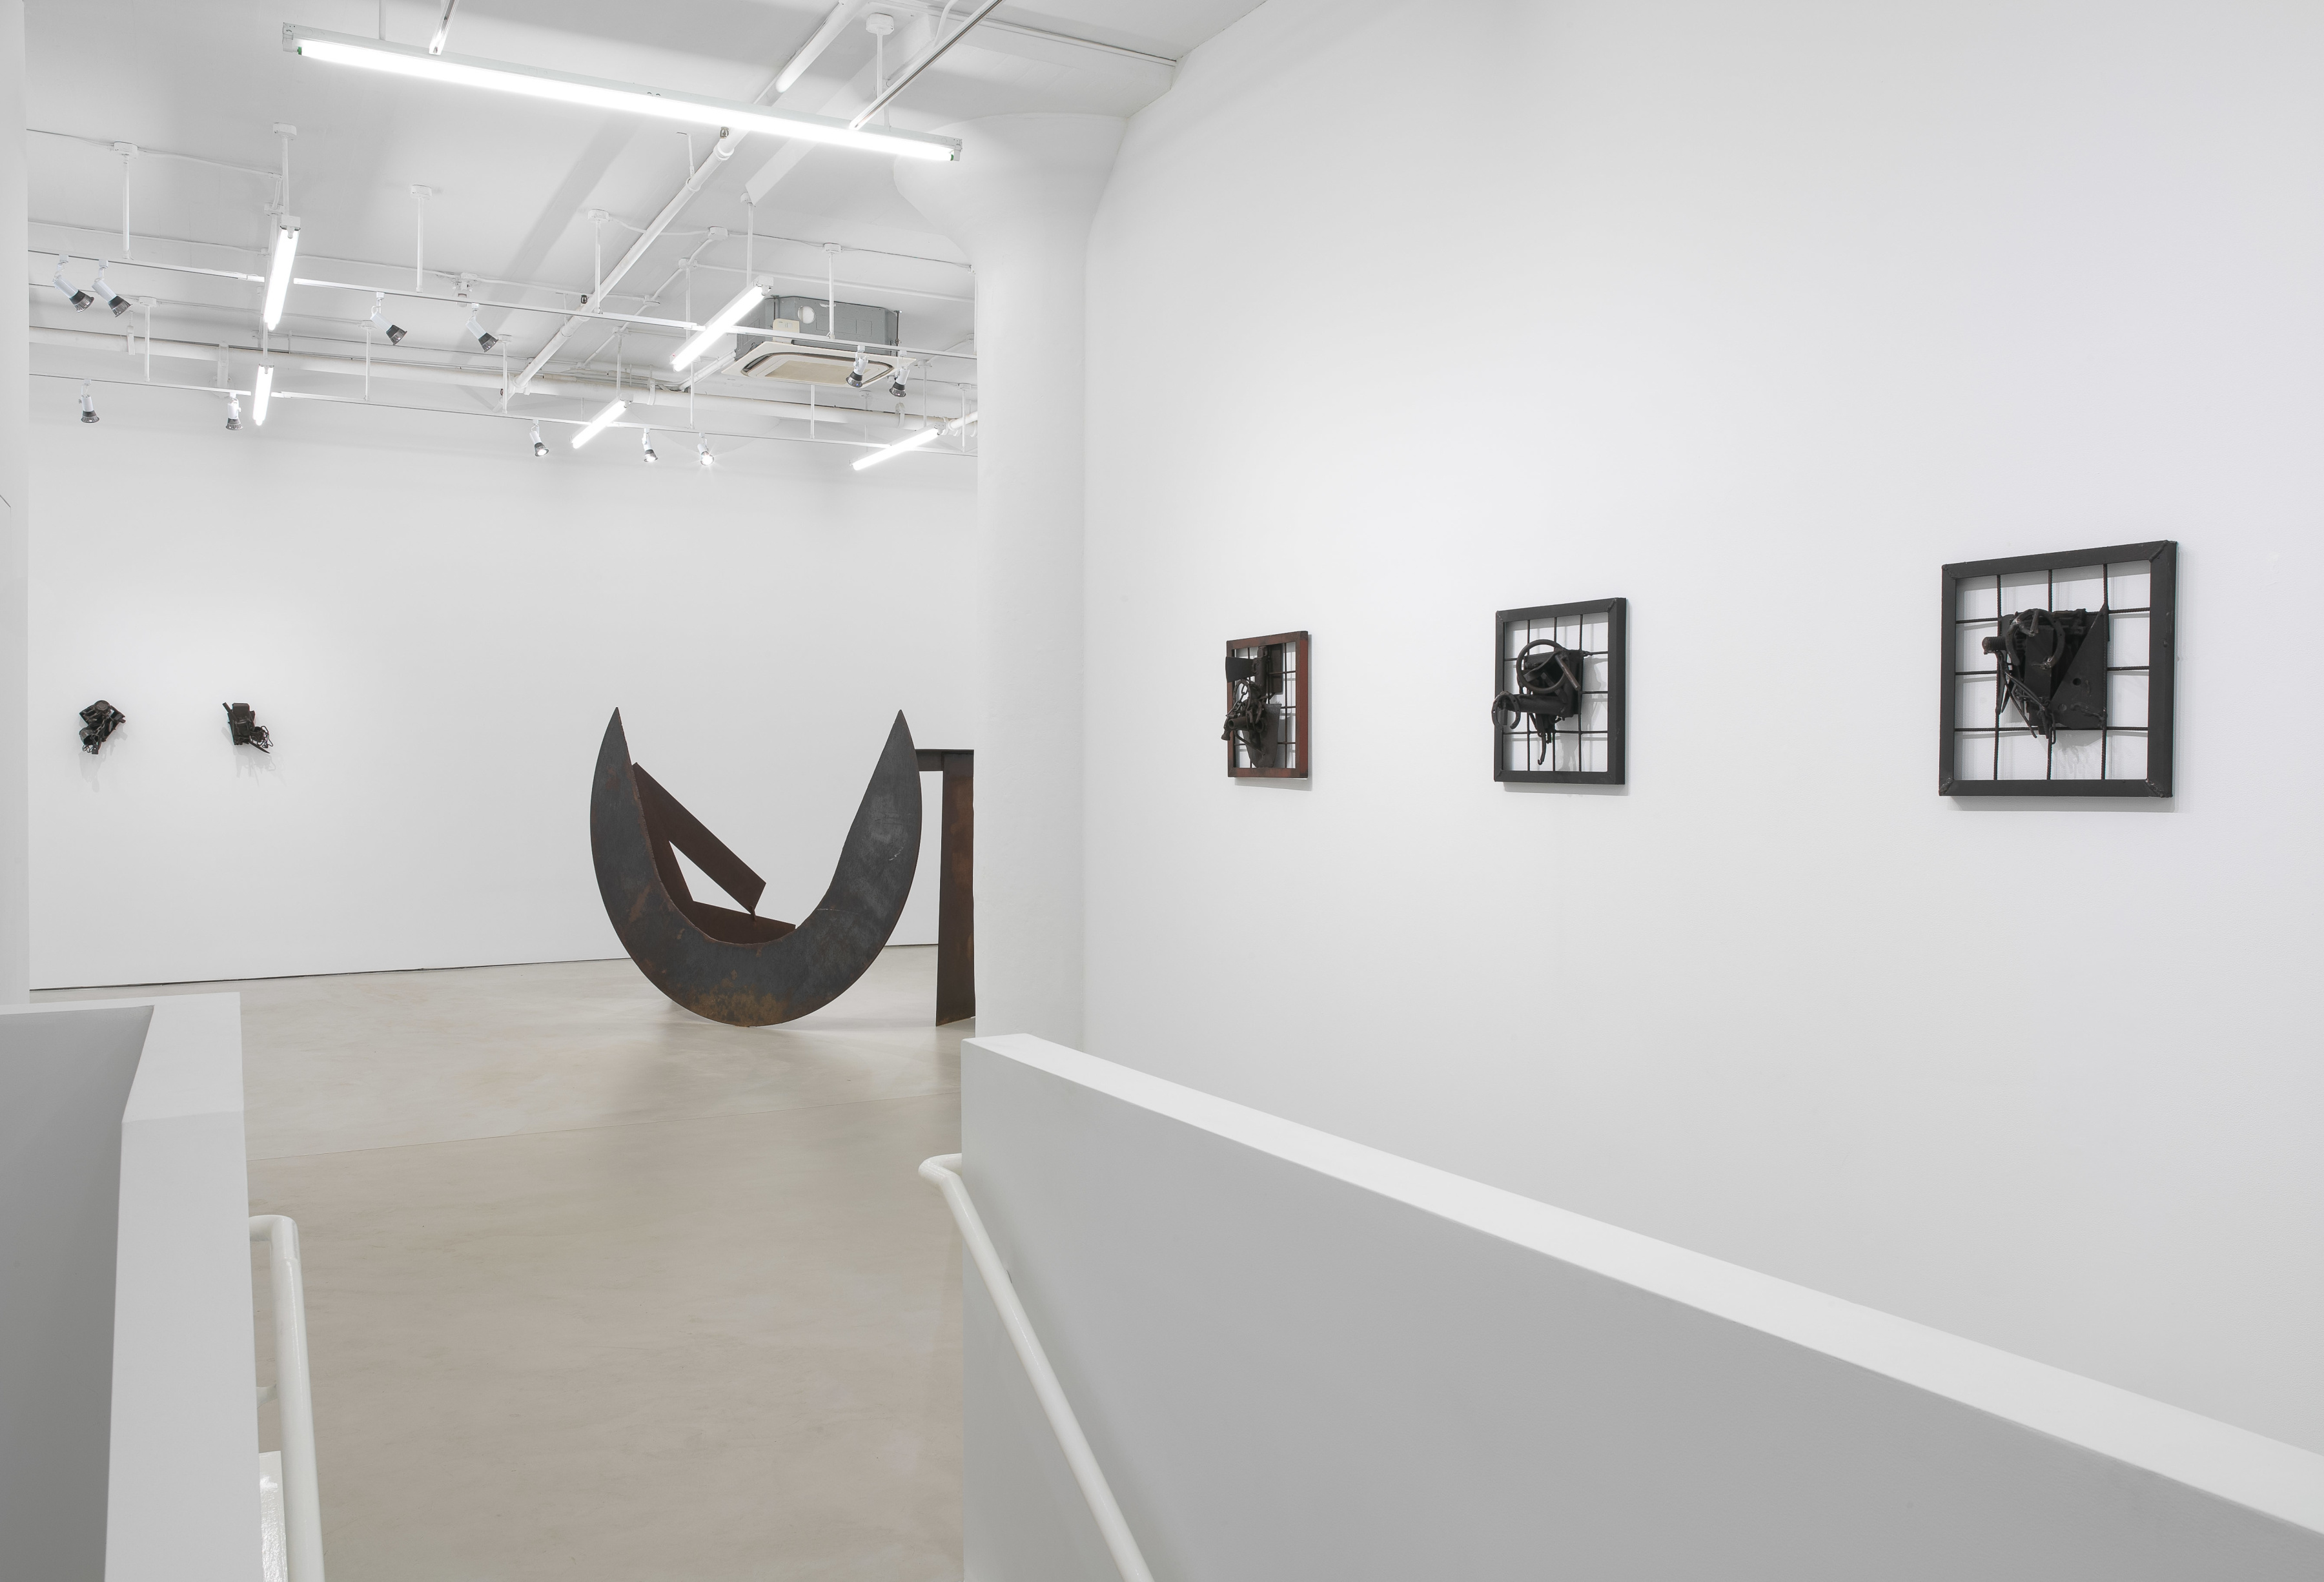 Melvin Edwards, installation view, Alexander Gray Associates, 2014